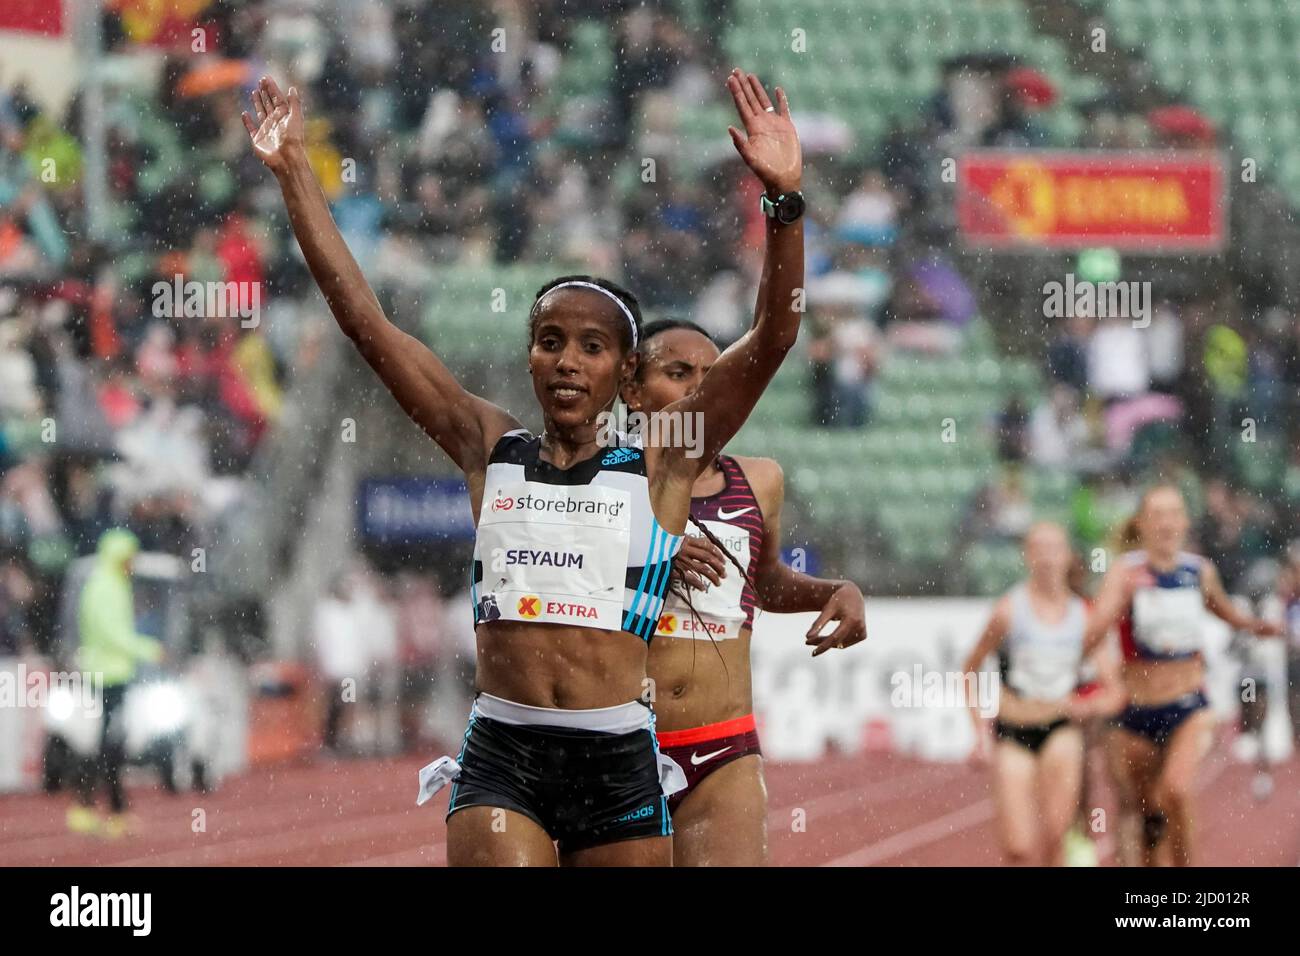 Oslo 20220616dawit Seyaum From Ethiopia Competes In The 5000m Women During The Diamond League Bislett Games 2022 Photo Stian Lysberg Solum Ntb 2JD012R 